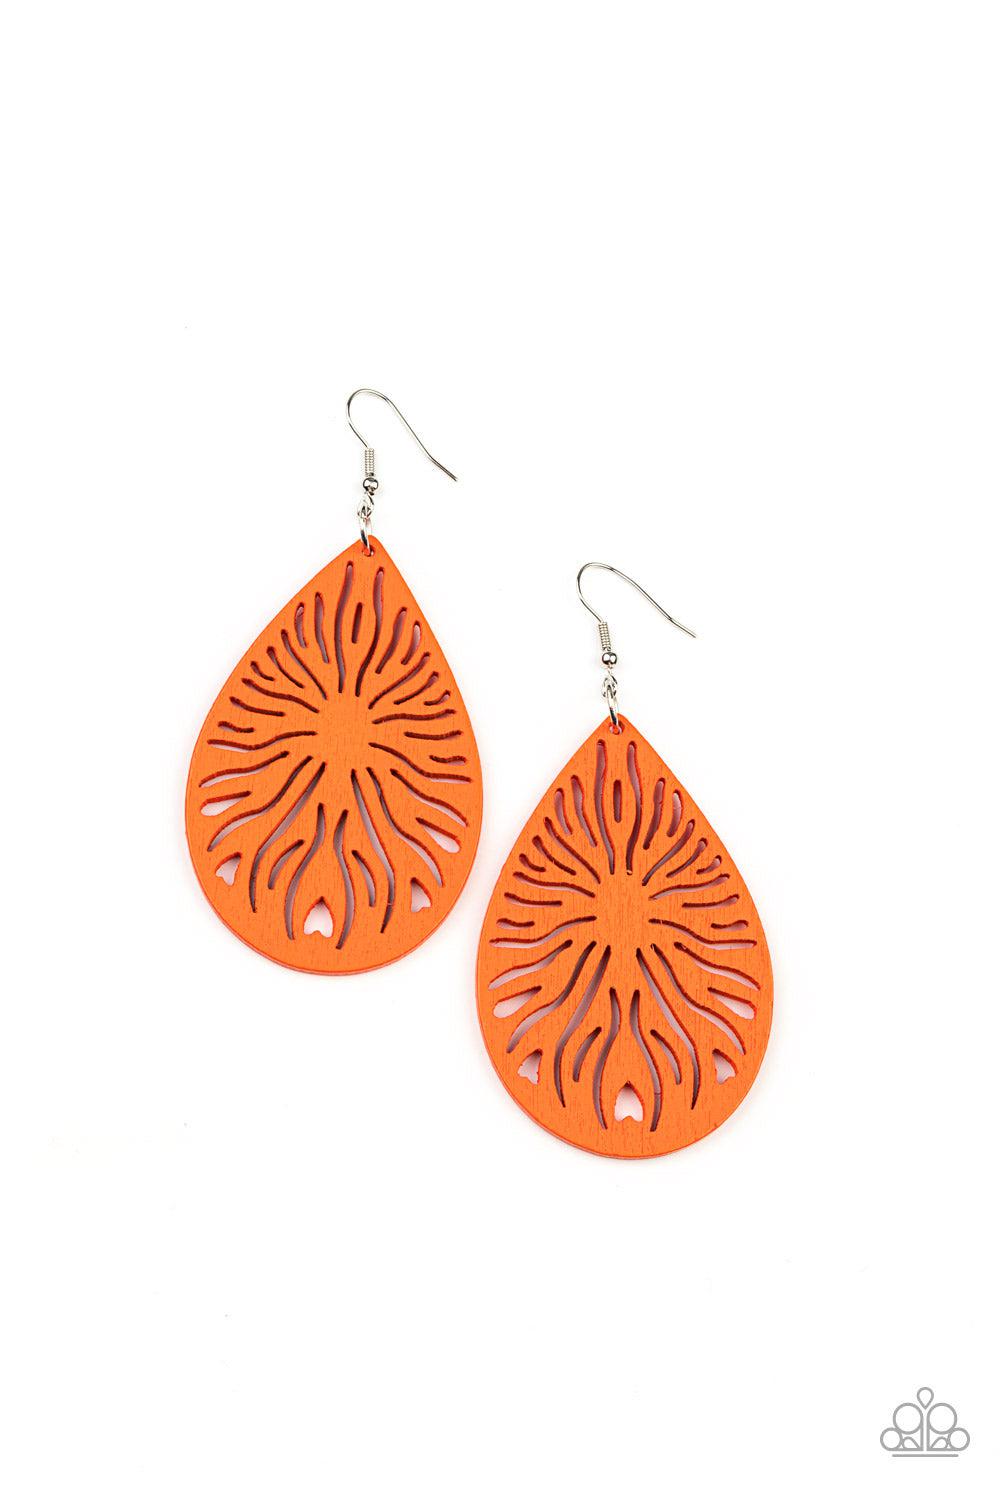 Sunny Incantations Orange Wood Earrings - Paparazzi Accessories- lightbox - CarasShop.com - $5 Jewelry by Cara Jewels